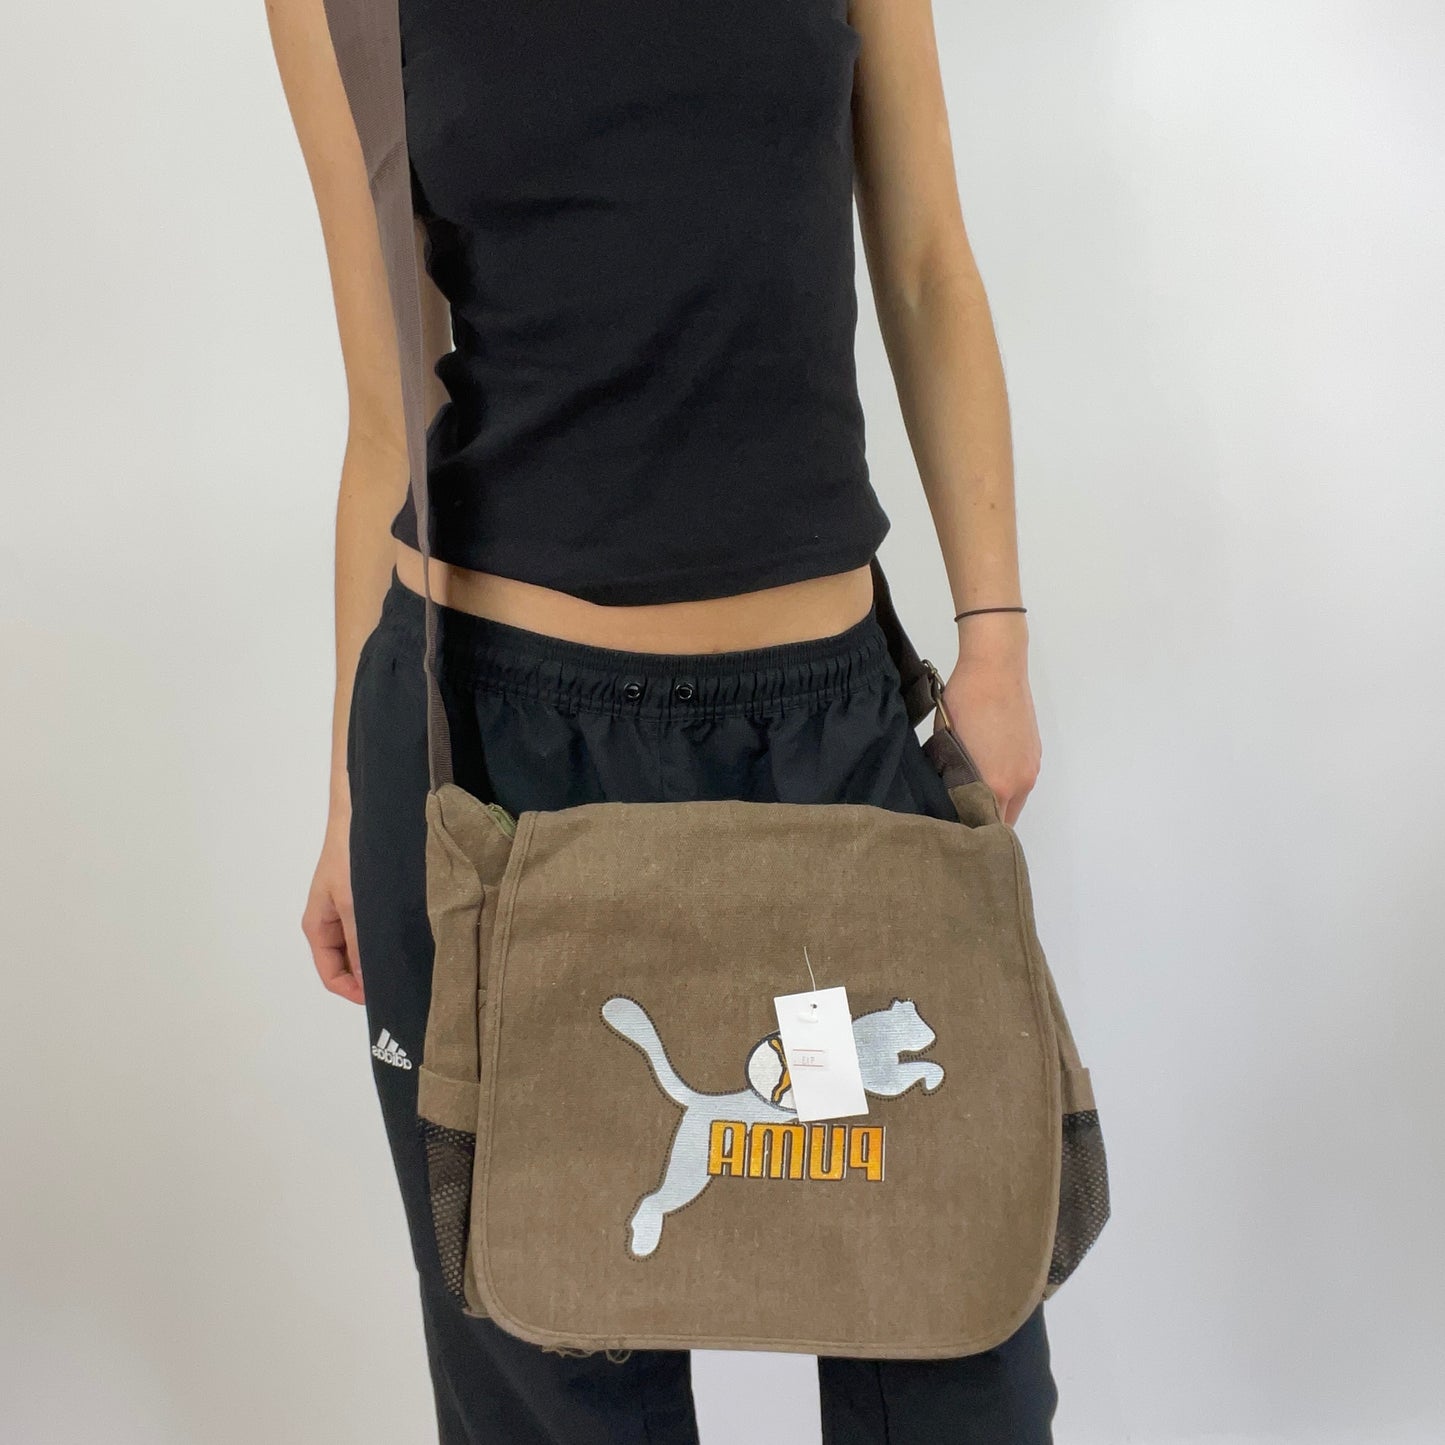 BLOKECORE DROP | brown puma bag